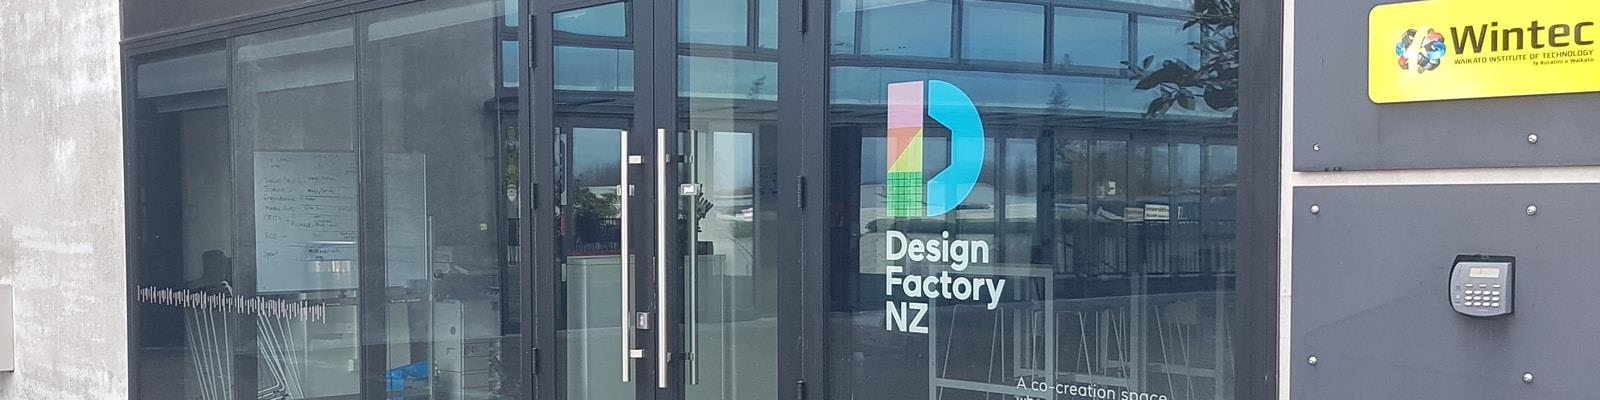 Design Factory NZ building entrance